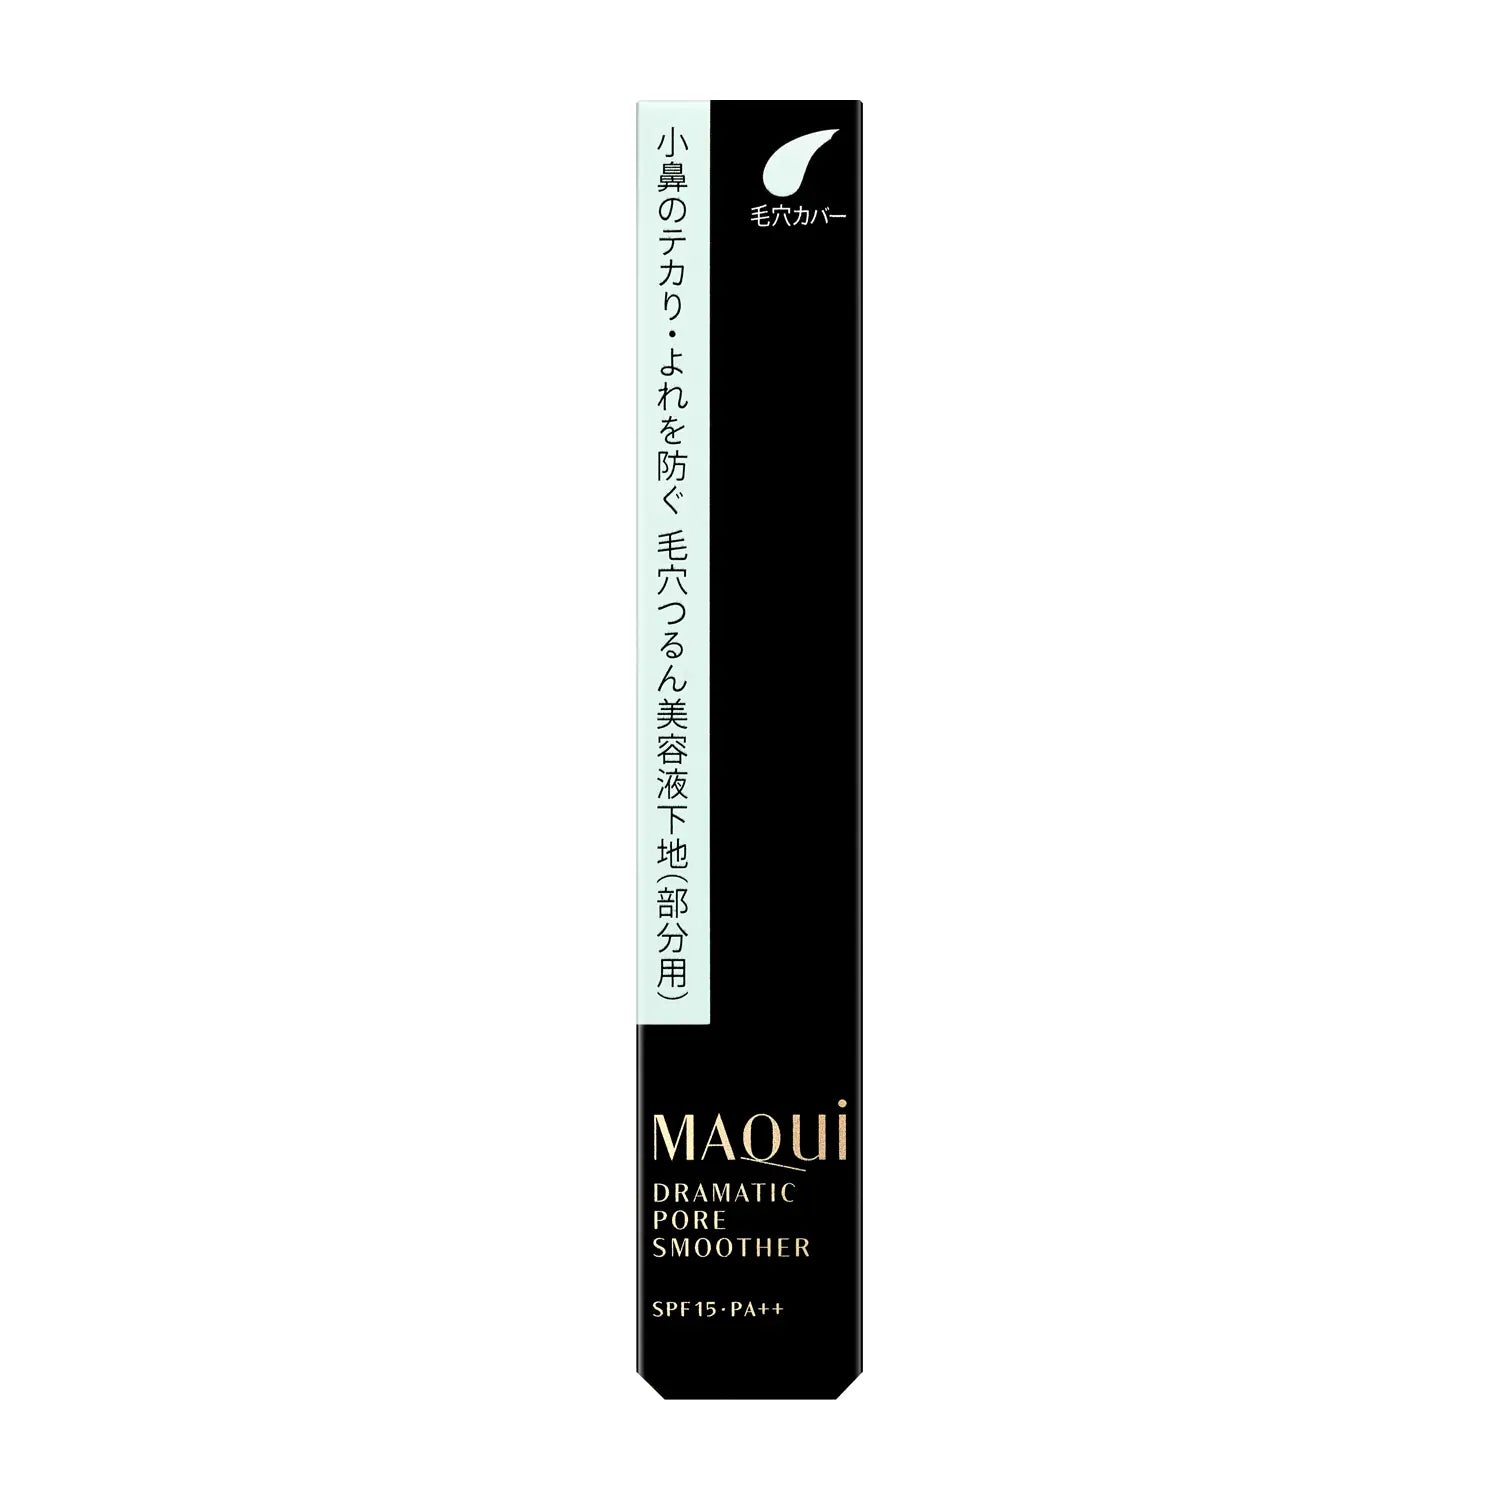 Maquillage Dramatic Pore Smoother - Ichiban Mart